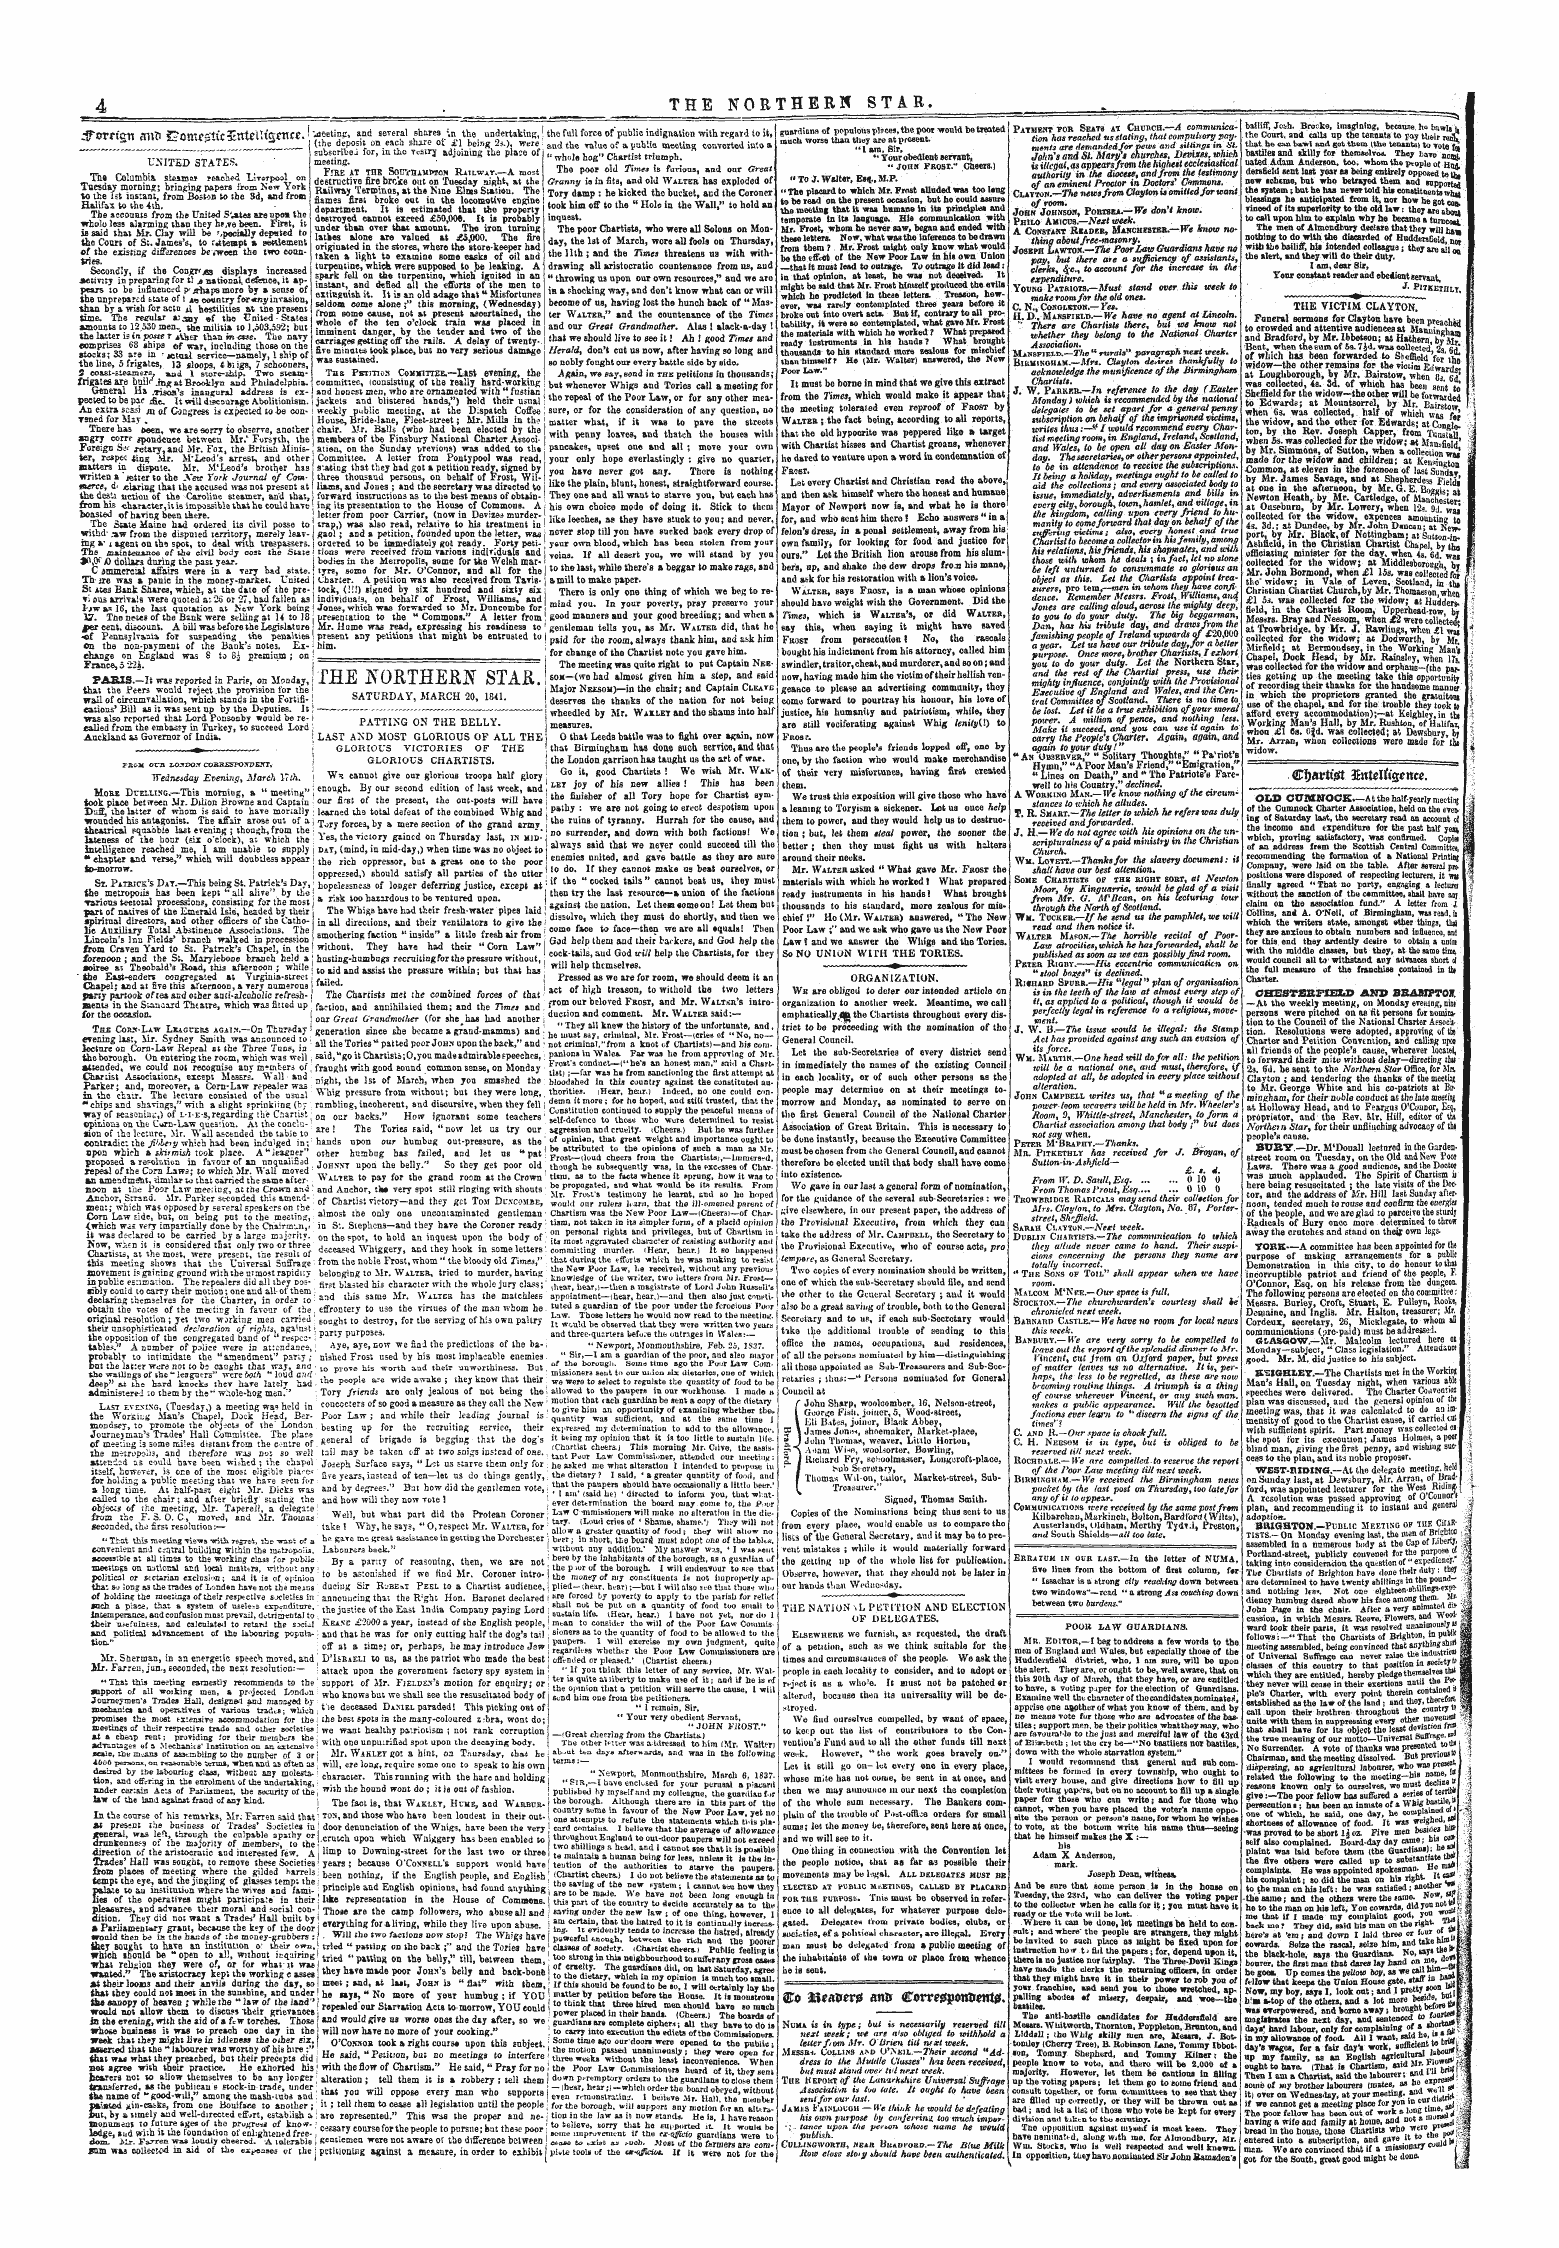 Northern Star (1837-1852): jS F Y, 1st edition - 2to Ttetftevfi Anlr Corci0tt4ffi&Gt;Mt0.